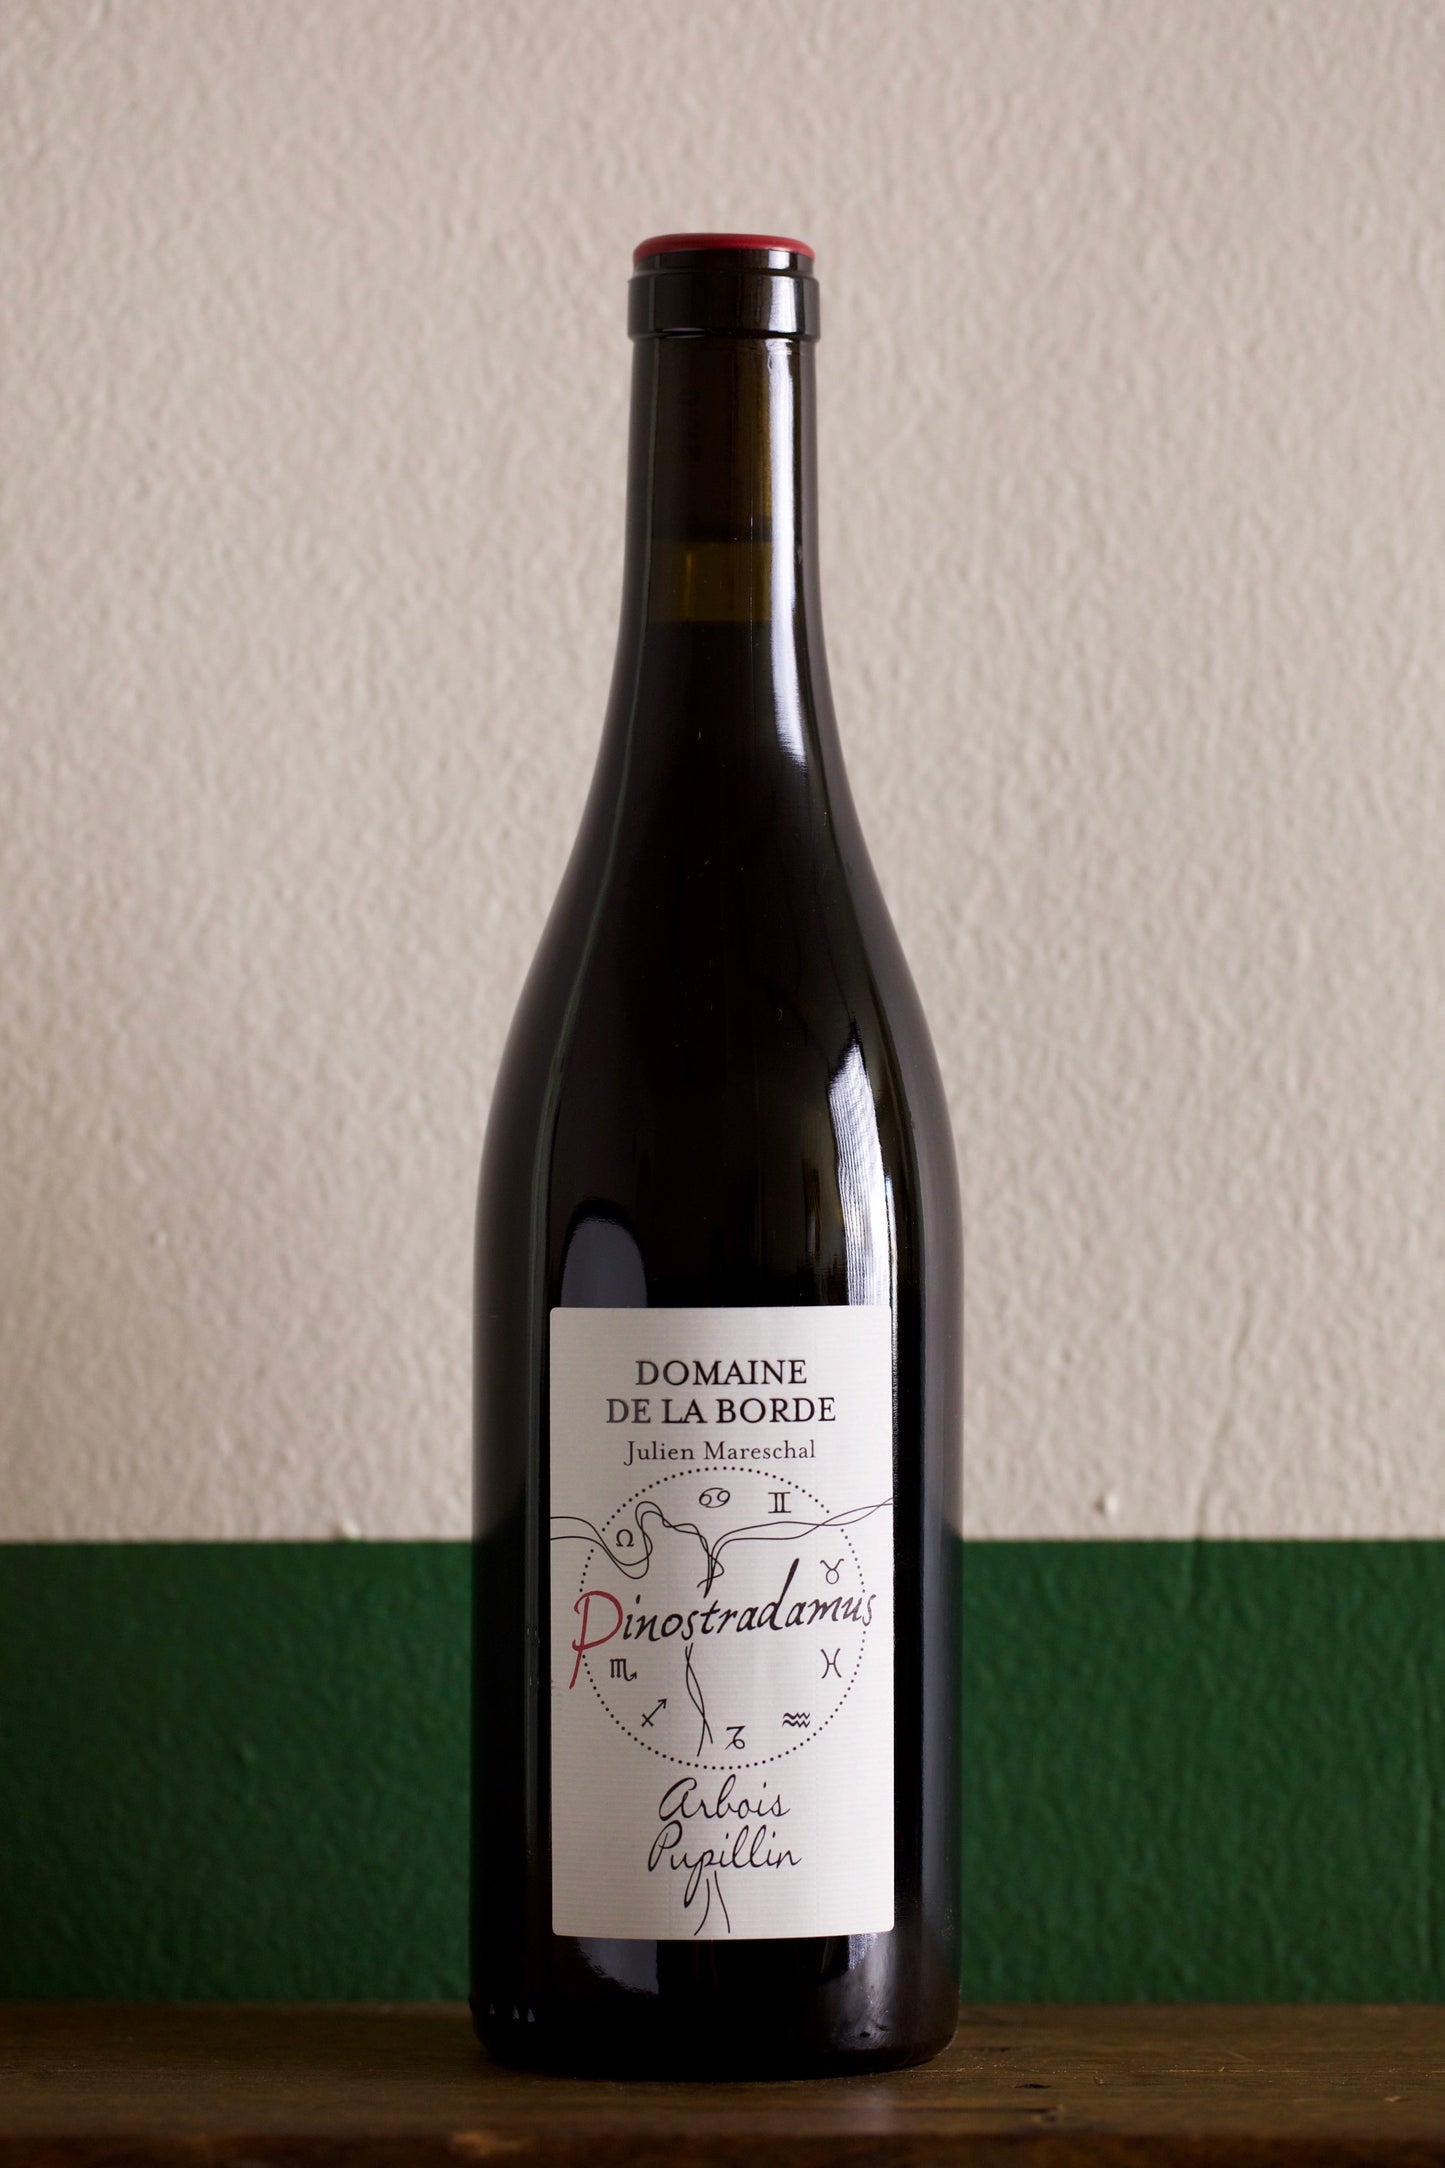 Bottle of Domaine de la Borde 'Pinostradamus' Pinot Noir 2020 750ml